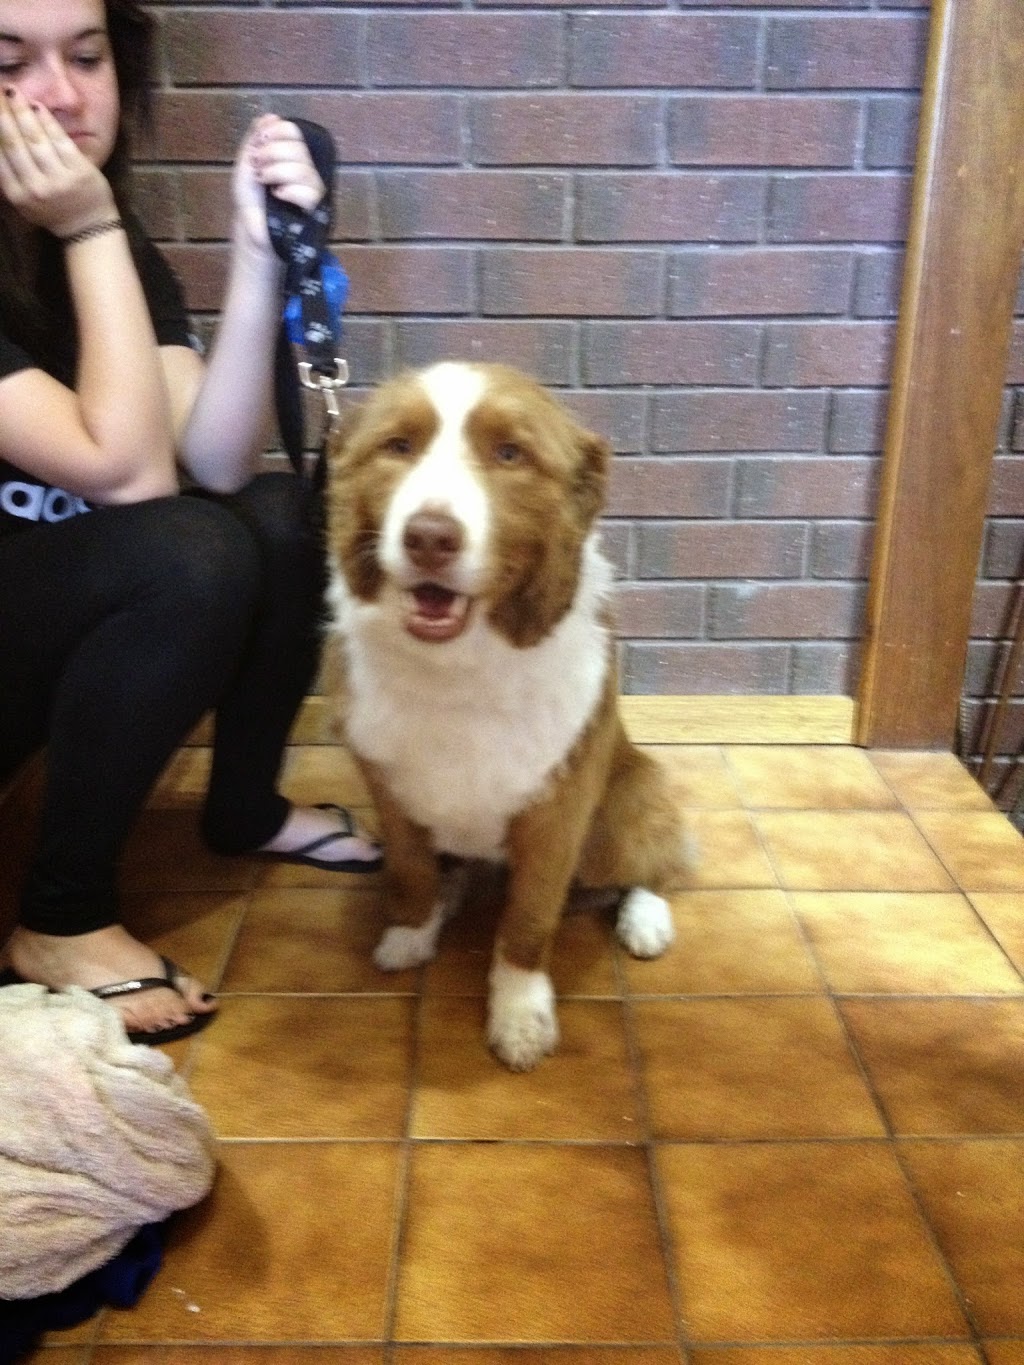 Shaggy Business Professional Dog Grooming |  | 6 Bayvue Cl, Carrickalinga SA 5204, Australia | 0402781548 OR +61 402 781 548